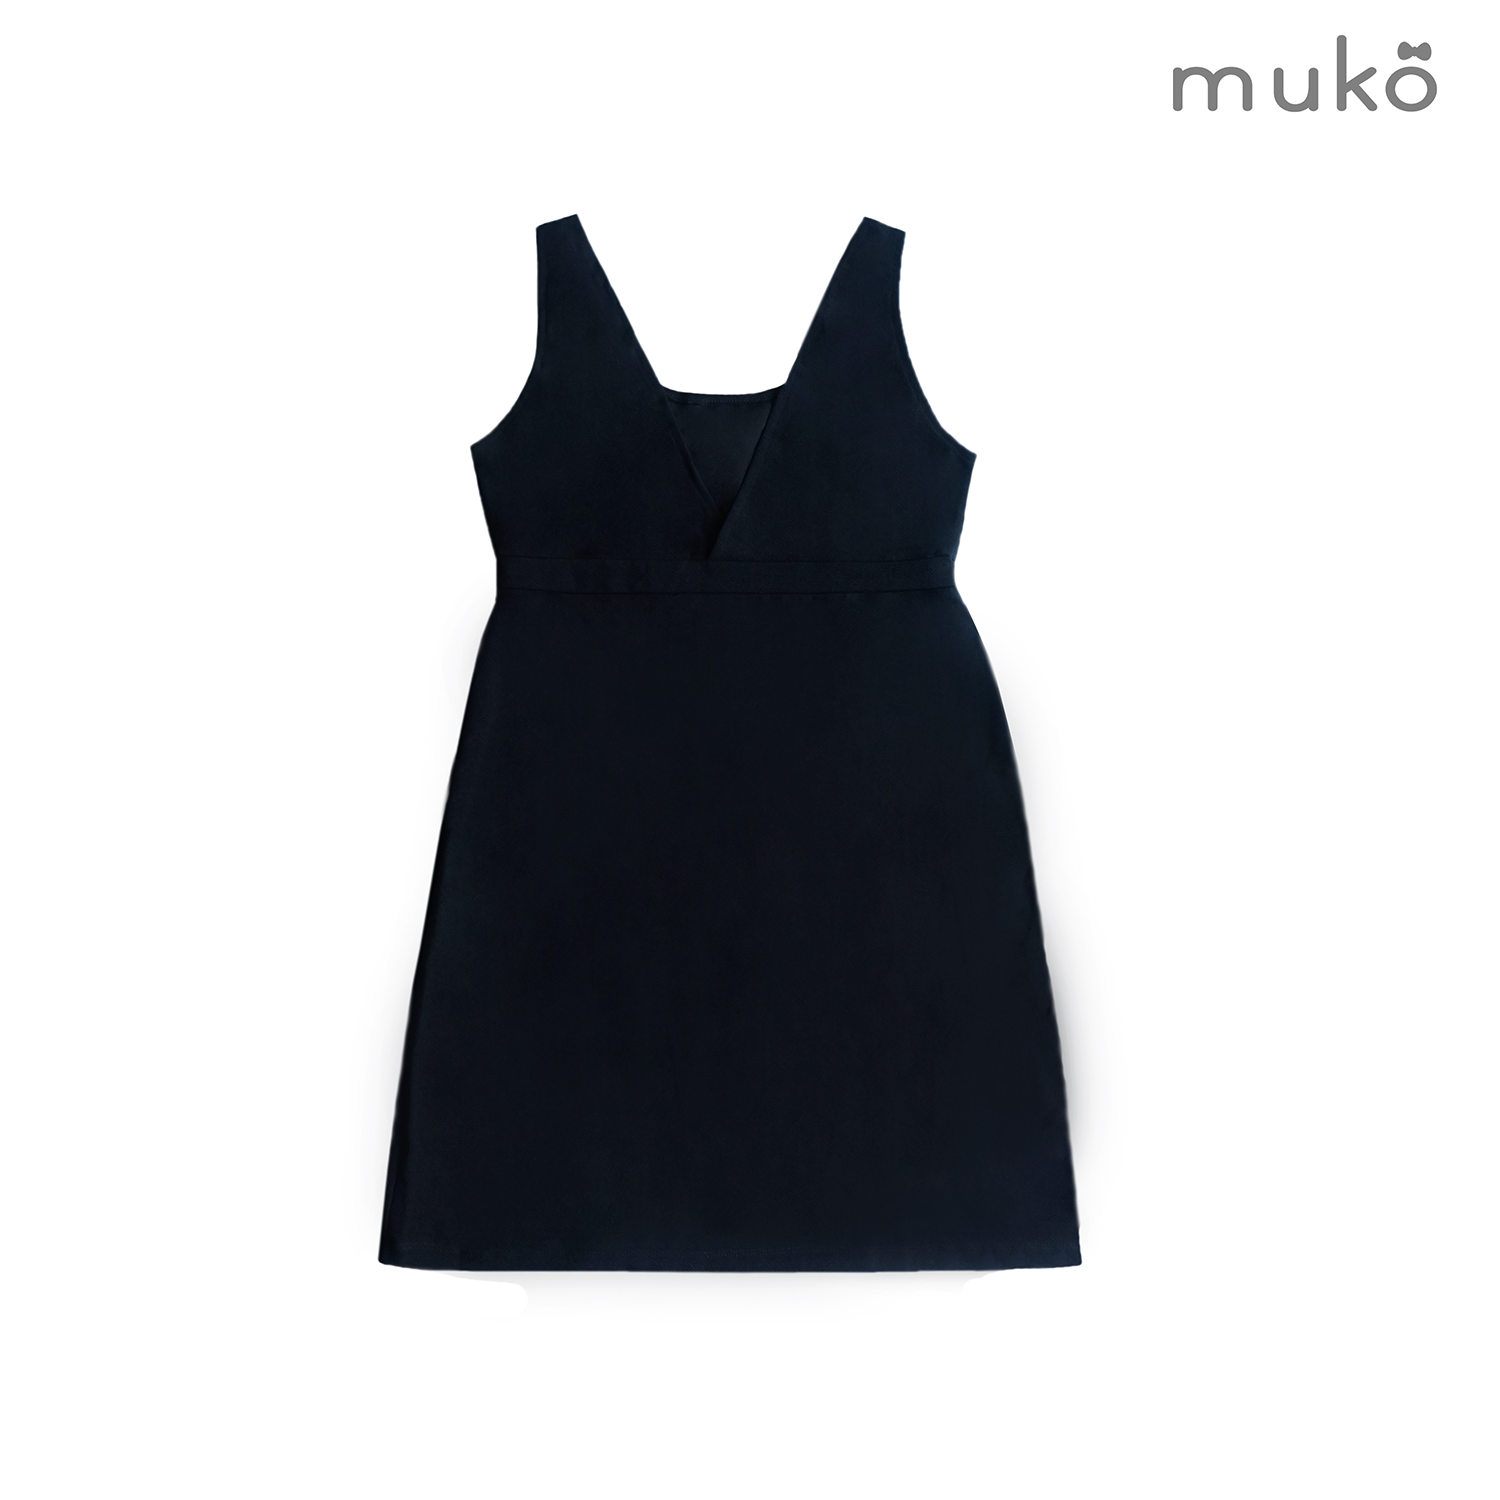 Muko Rin **กระโปรงเอี๊ยม**อย่างเดียว คลุมท้องหรือจะใส่แฟชั่นสวยๆก็ได้นะคะ DM11-006 สีดำ